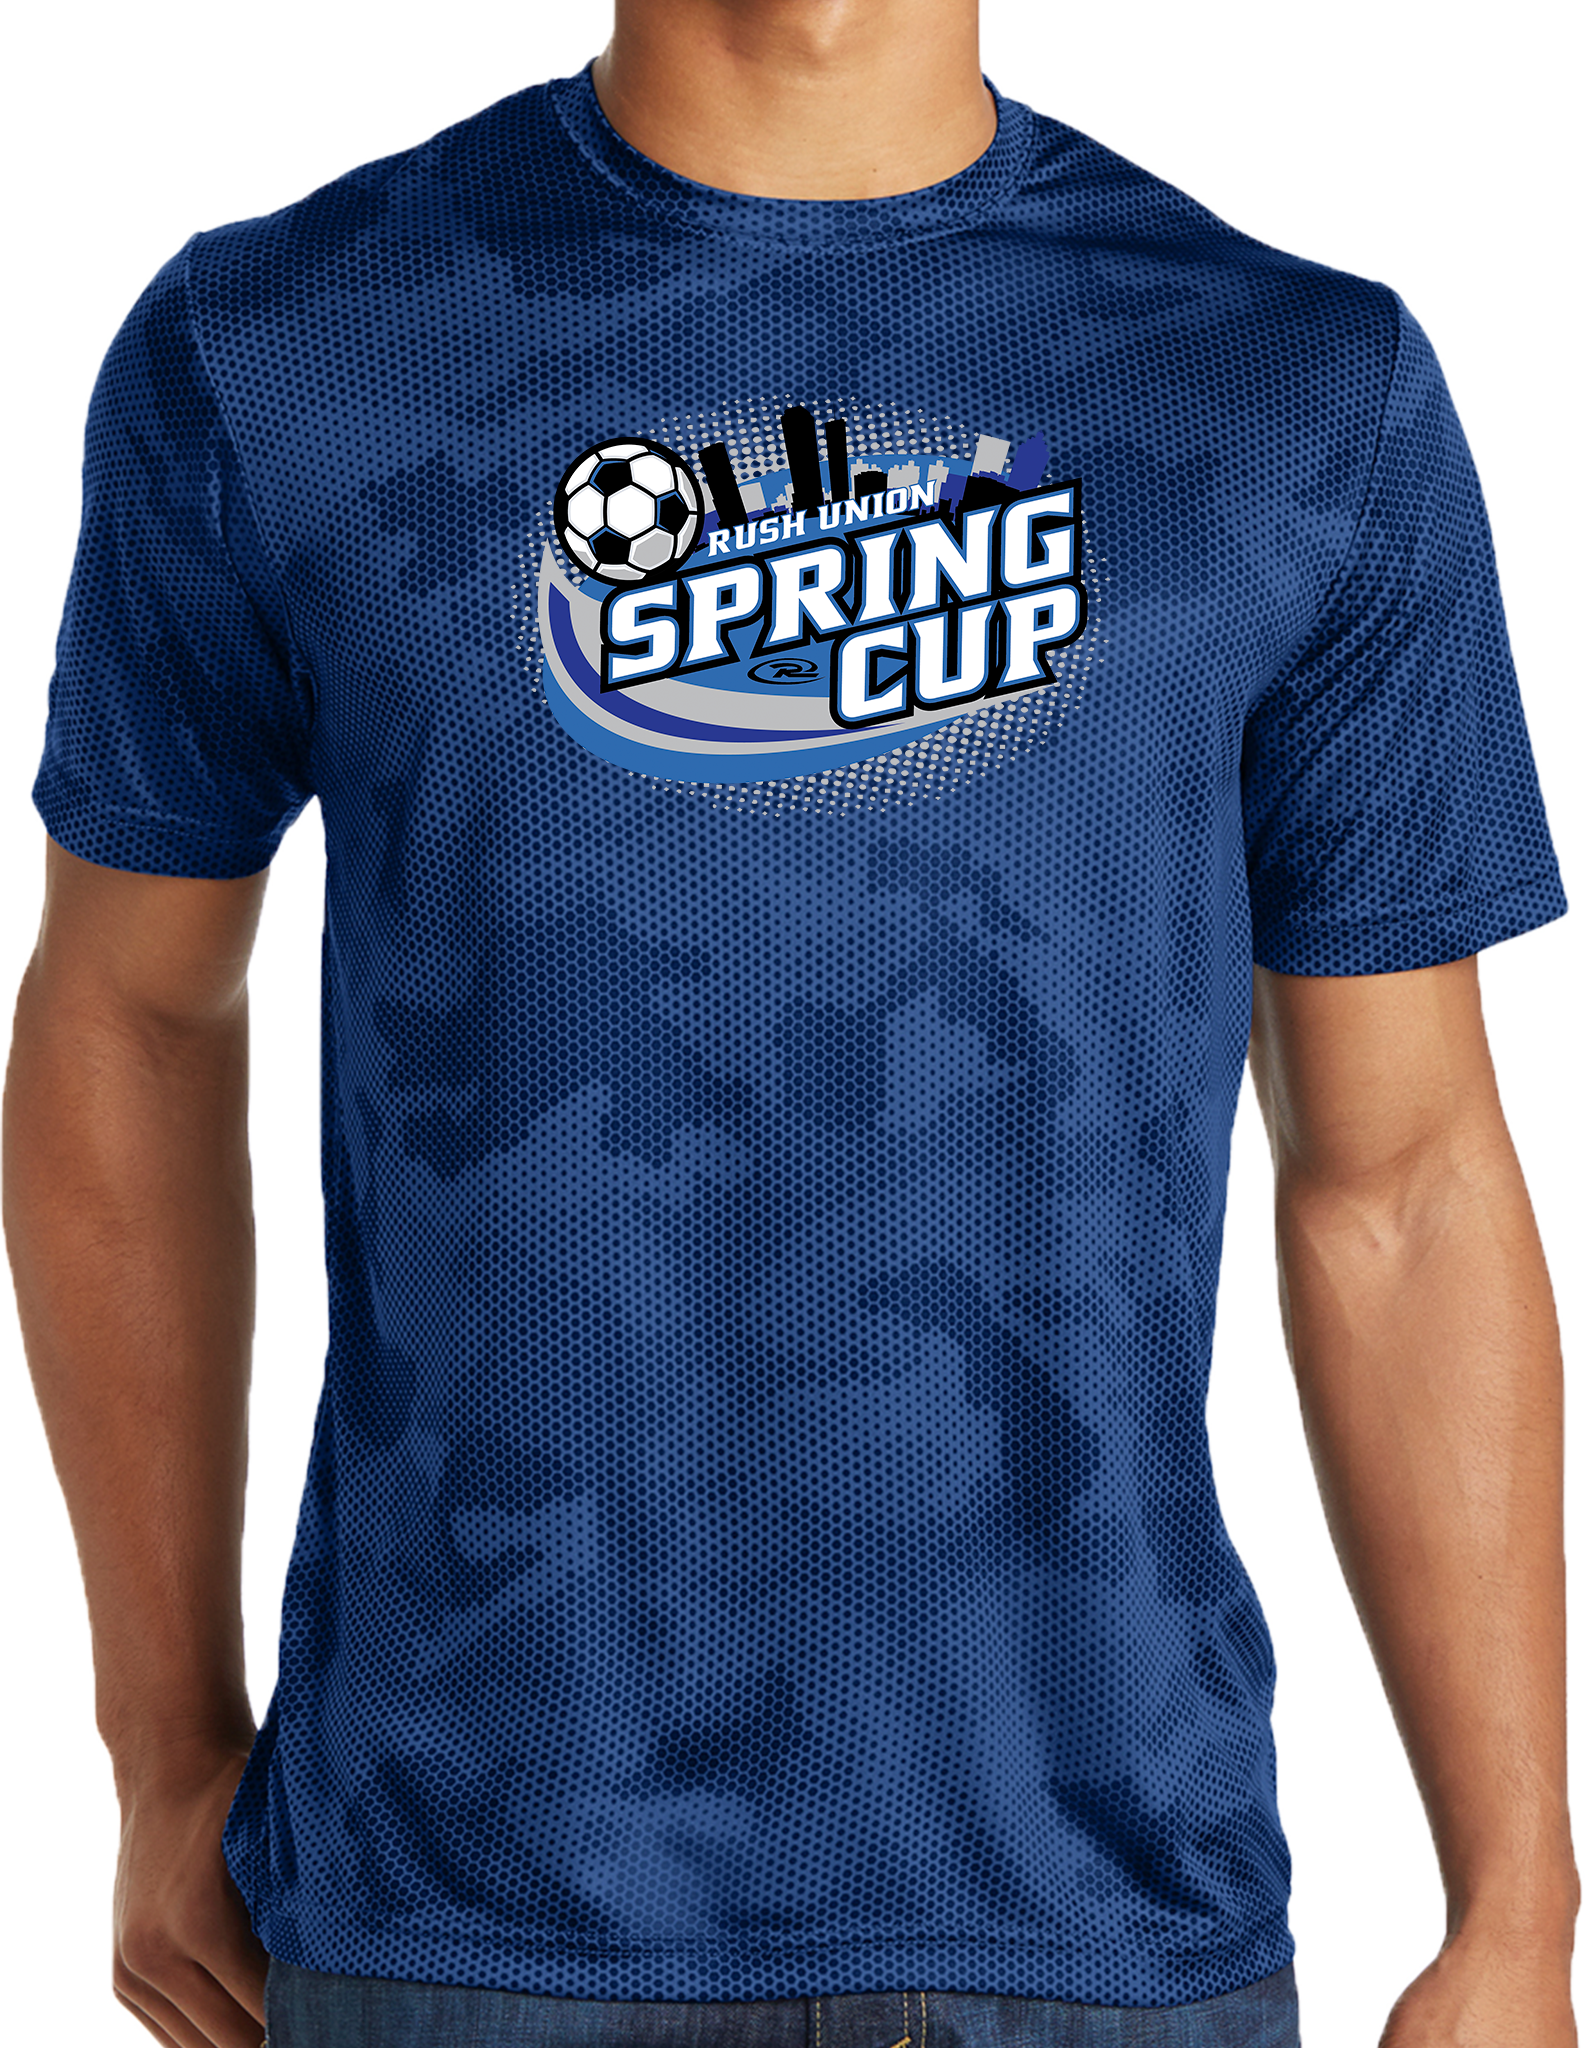 PERFORMANCE SHIRTS - 2023 Rush Union Spring Cup